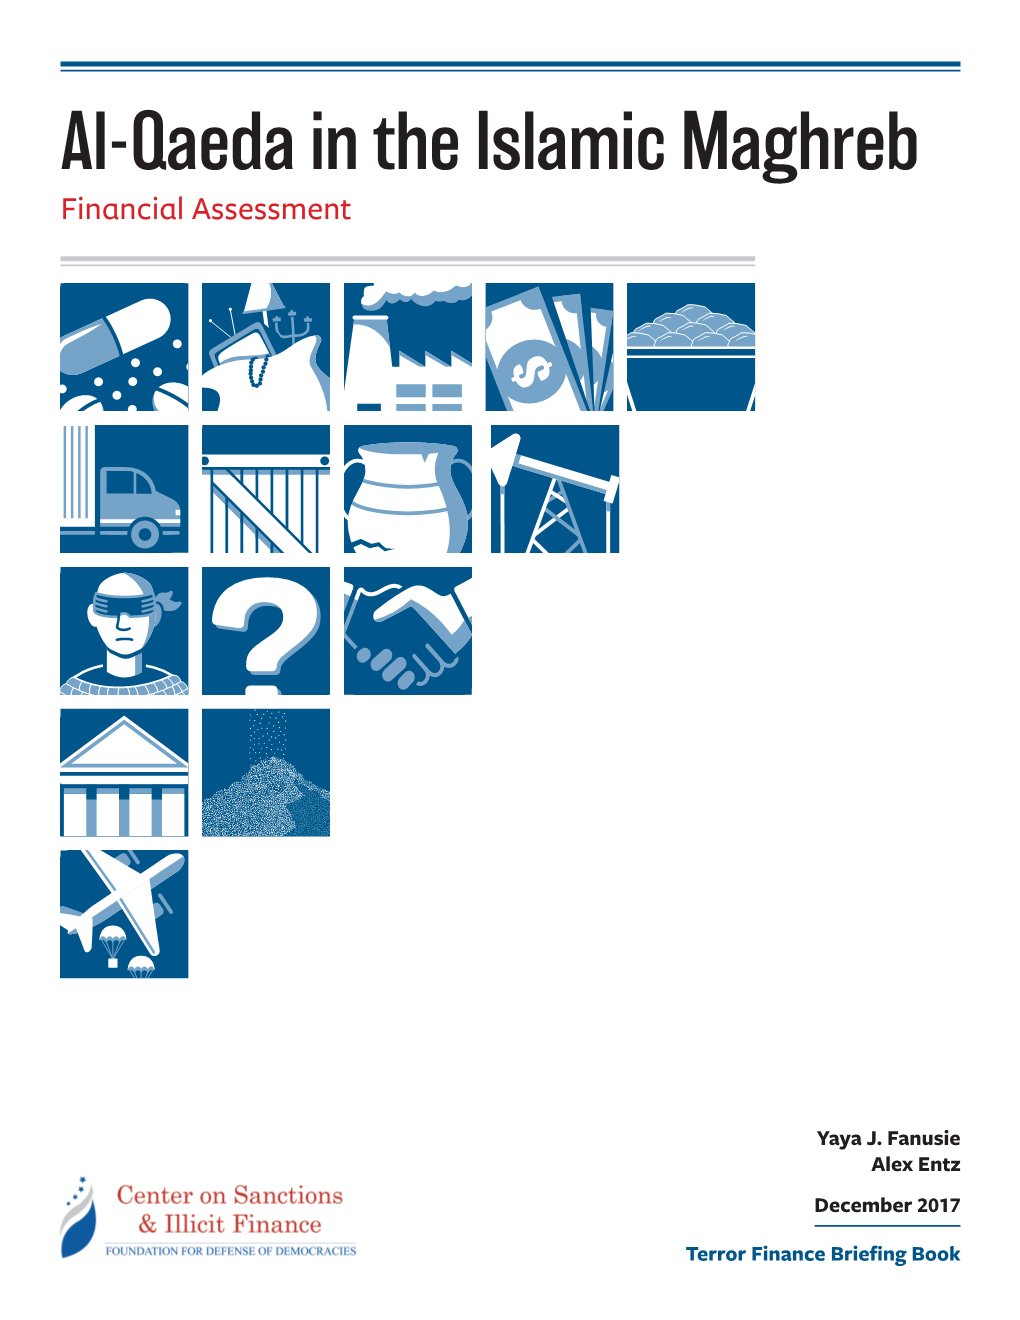 Al-Qaeda in the Islamic Maghreb Financial Assessment